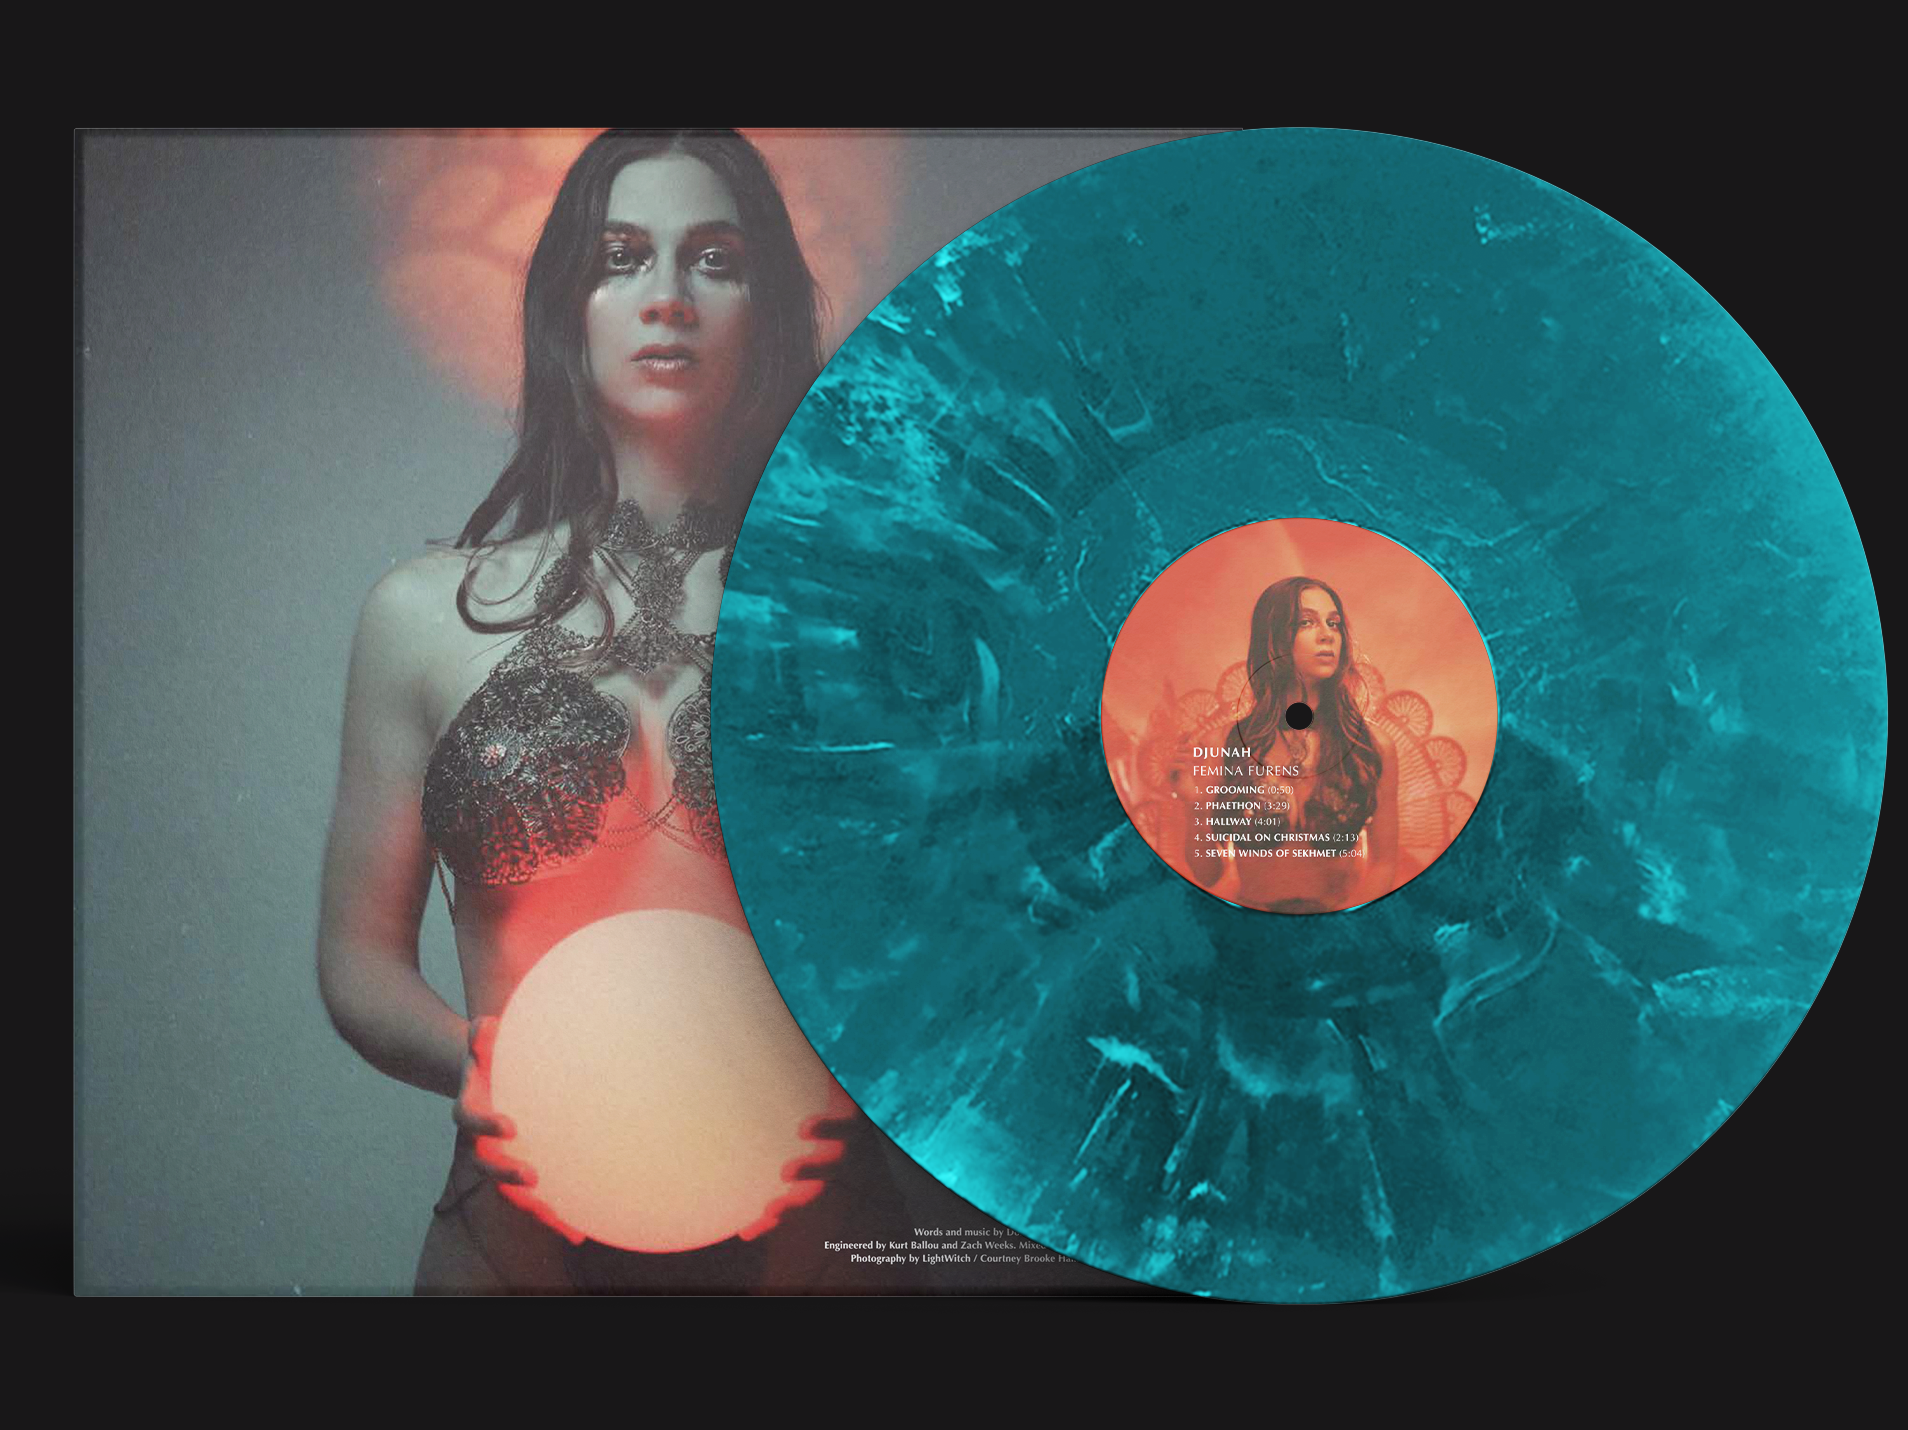 Djunah "Femina Furens" second pressing 12" vinyl LP on deep ocean swirl, reverse cover, pressed by Smashed Plastic in Chicago, Illinois